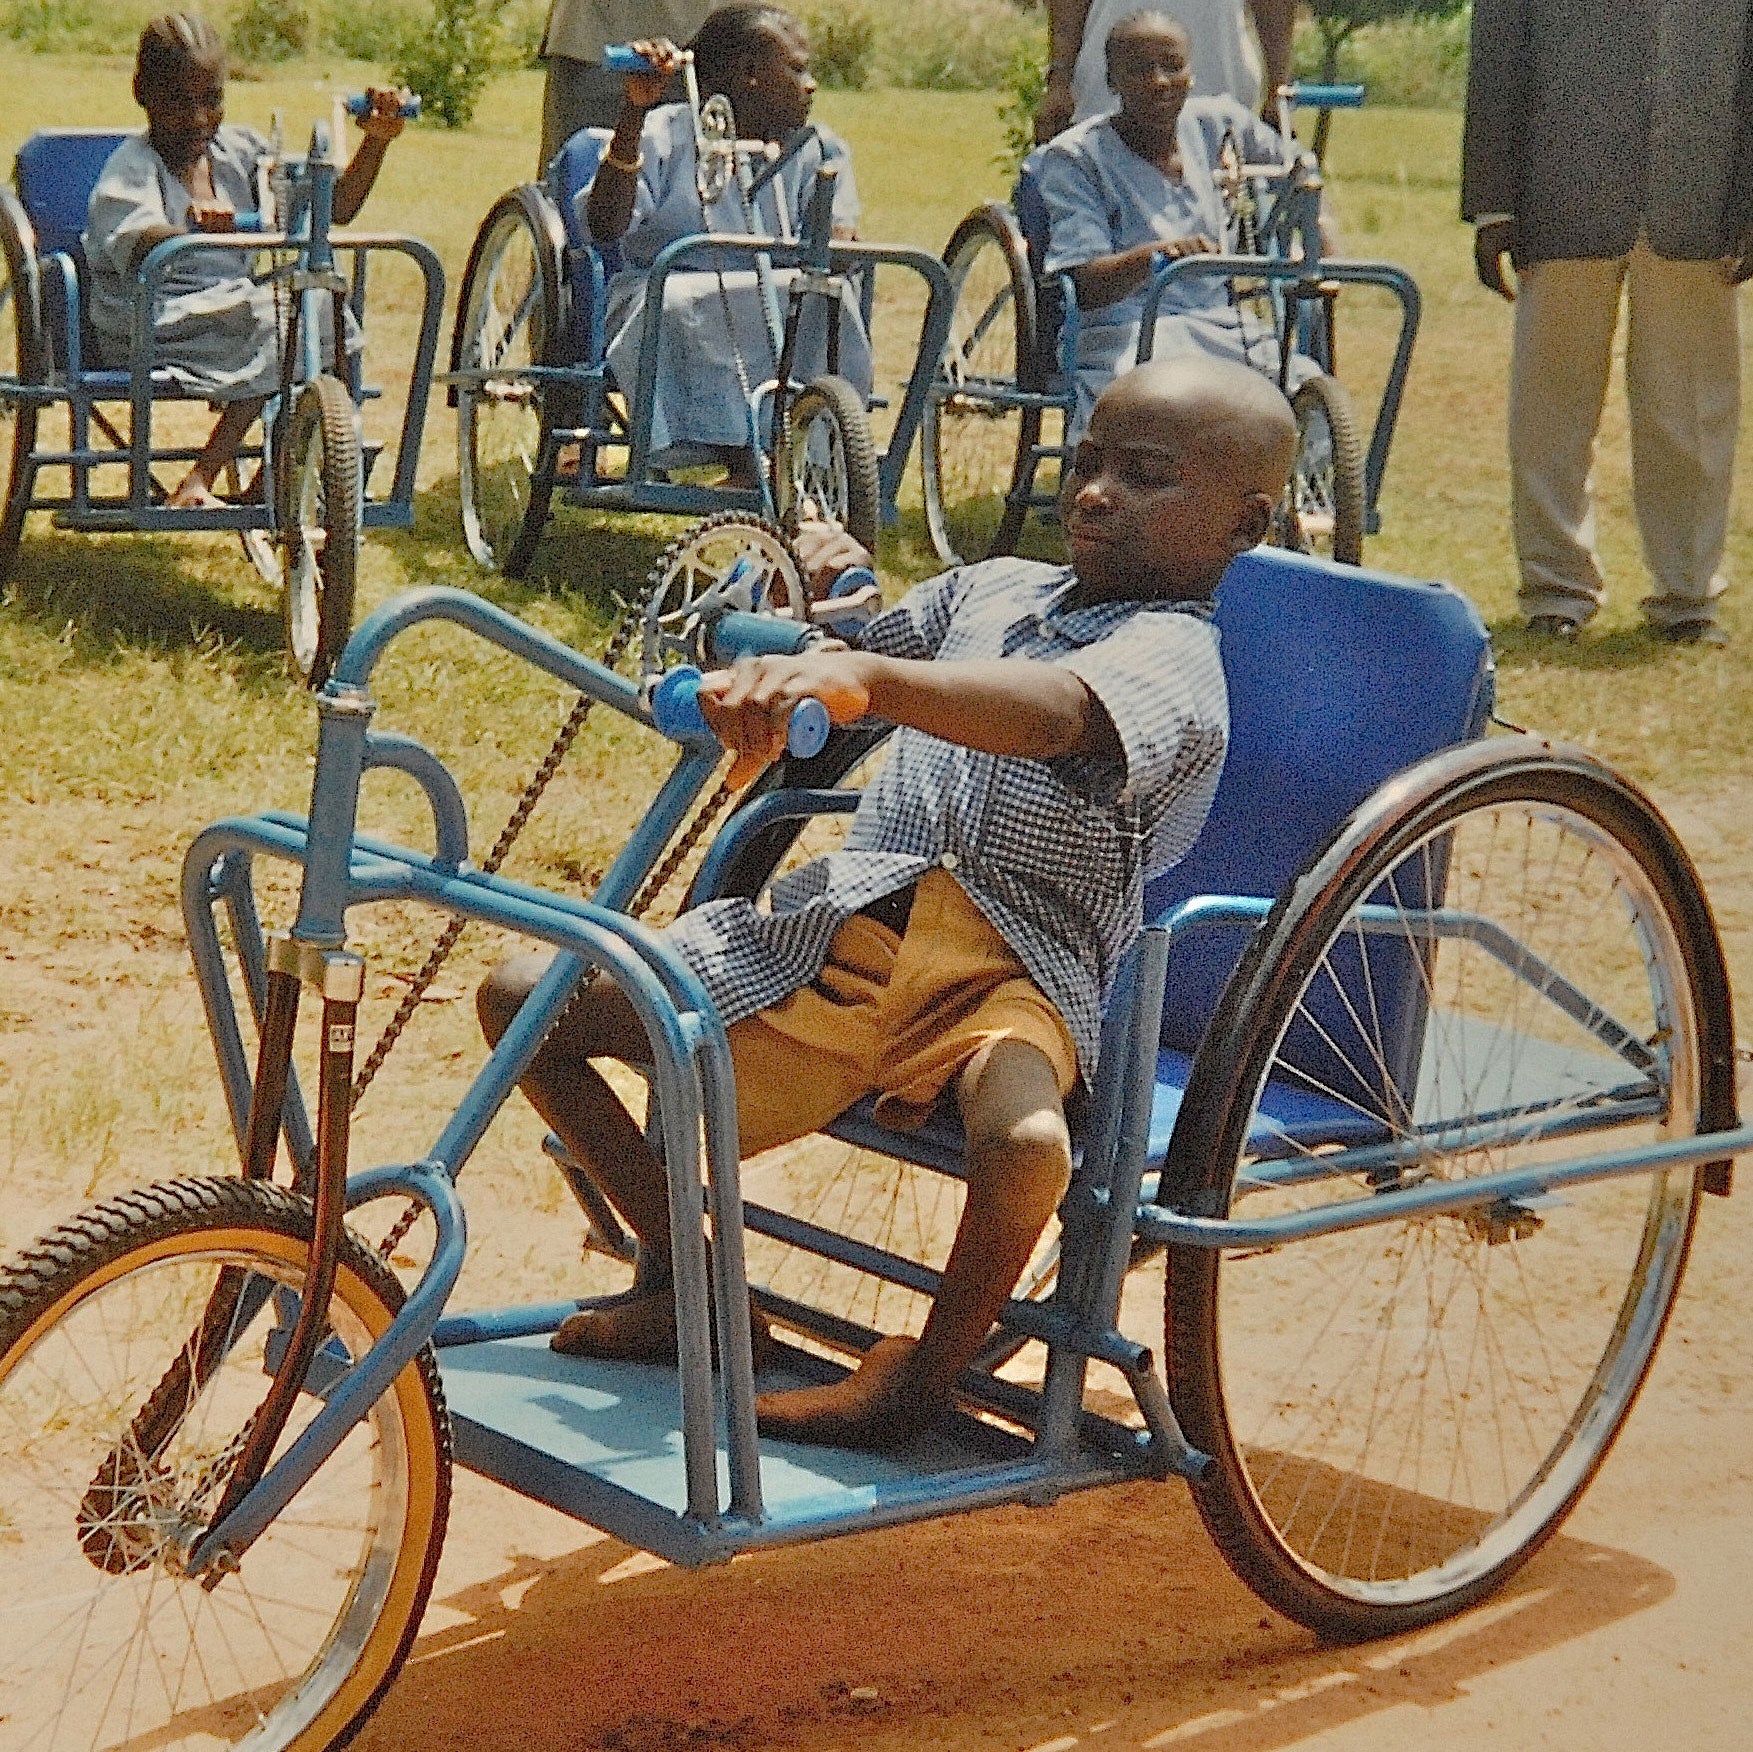 Sadaqa Hand Tricycle in Nigeria - Shared